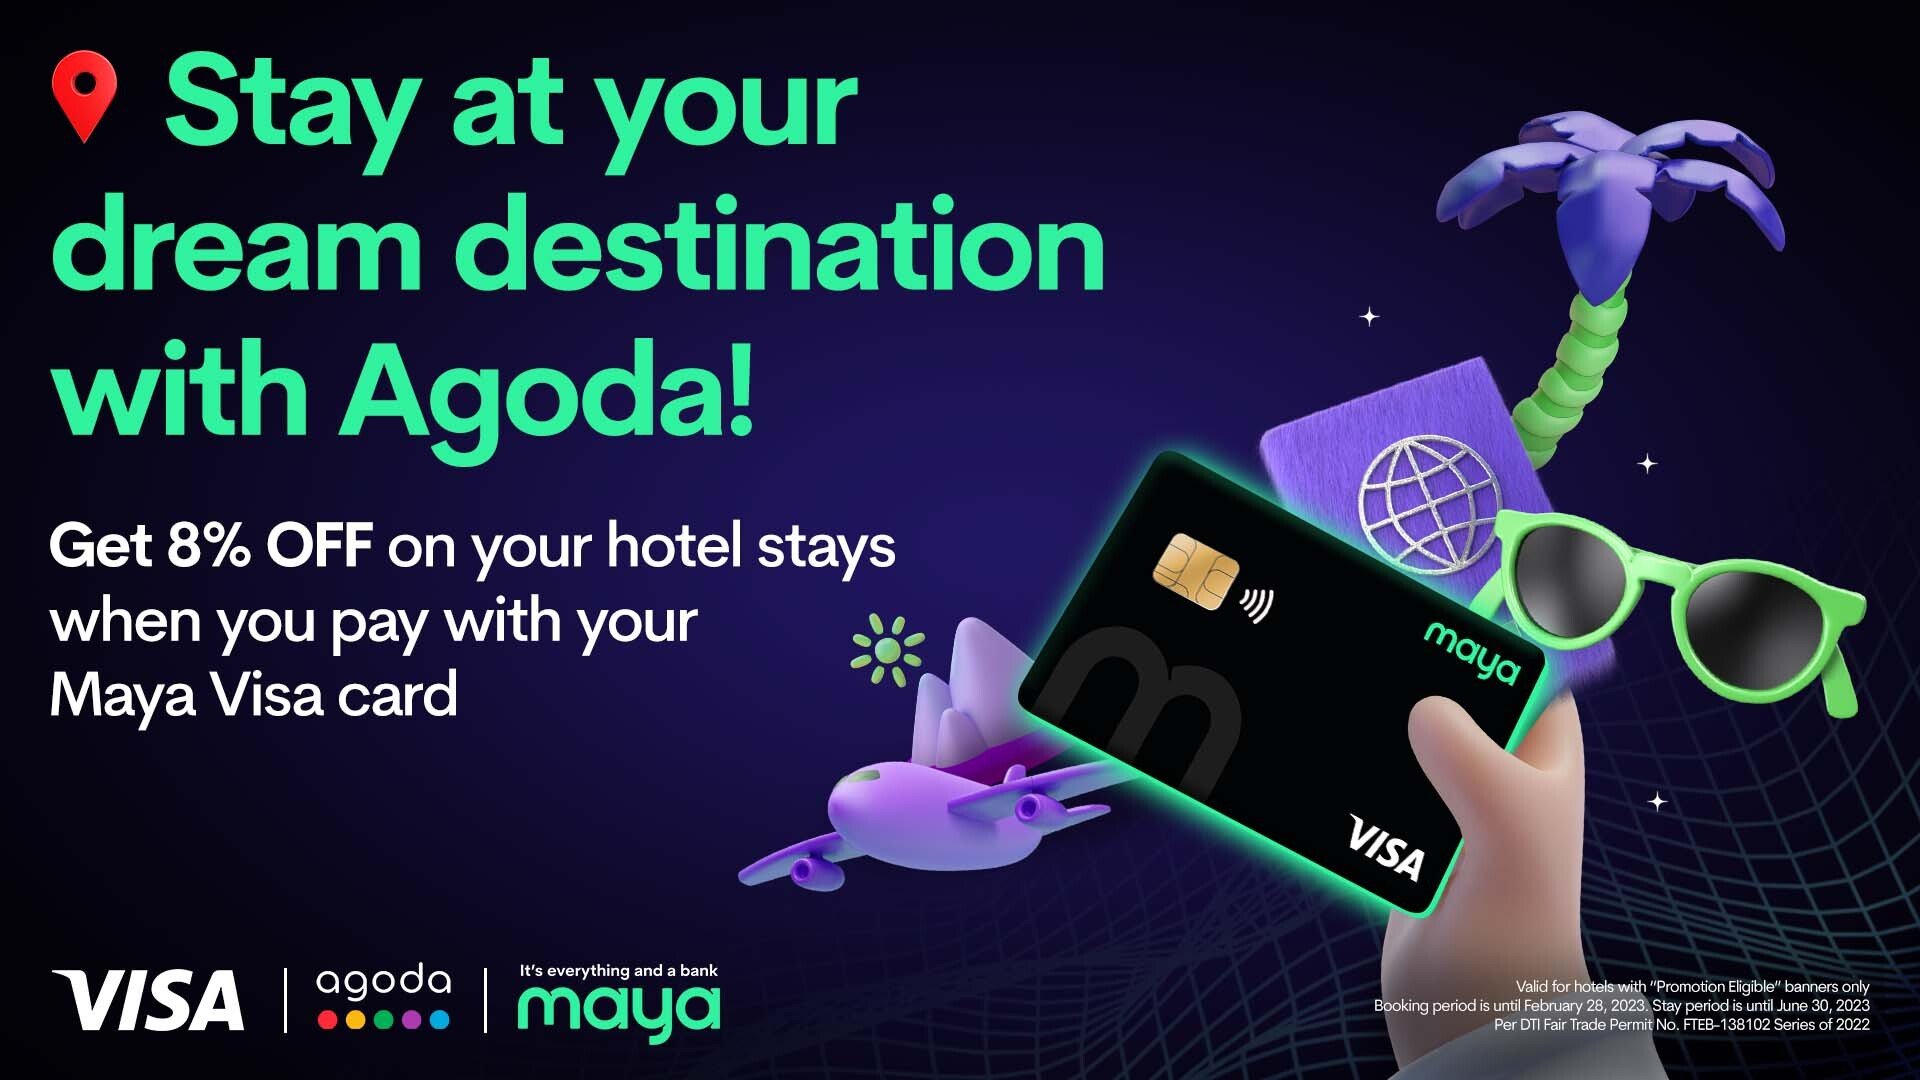 Get 8% OFF hotel bookings on Agoda using your Maya Visa card!